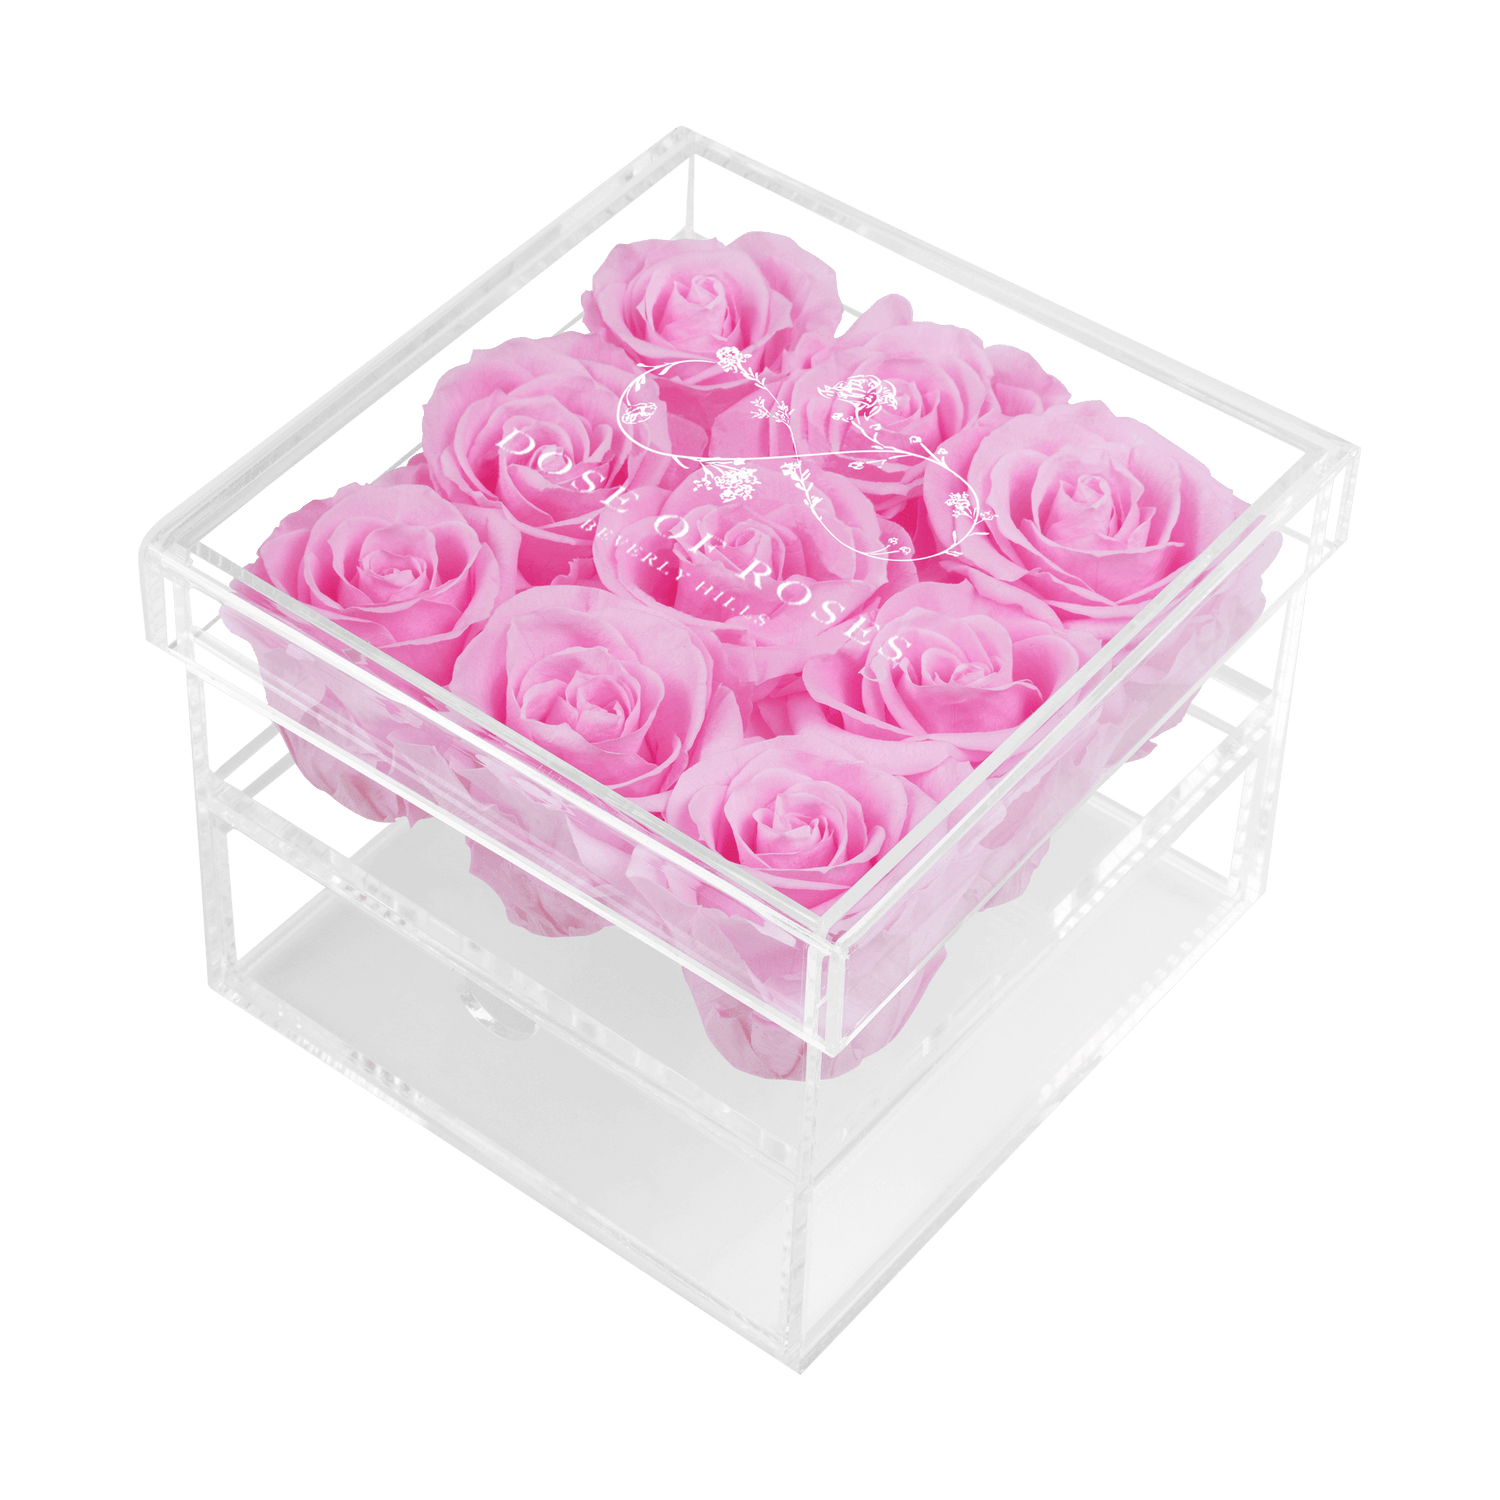 Preserved Pink Roses Medium Square Acrylic Box